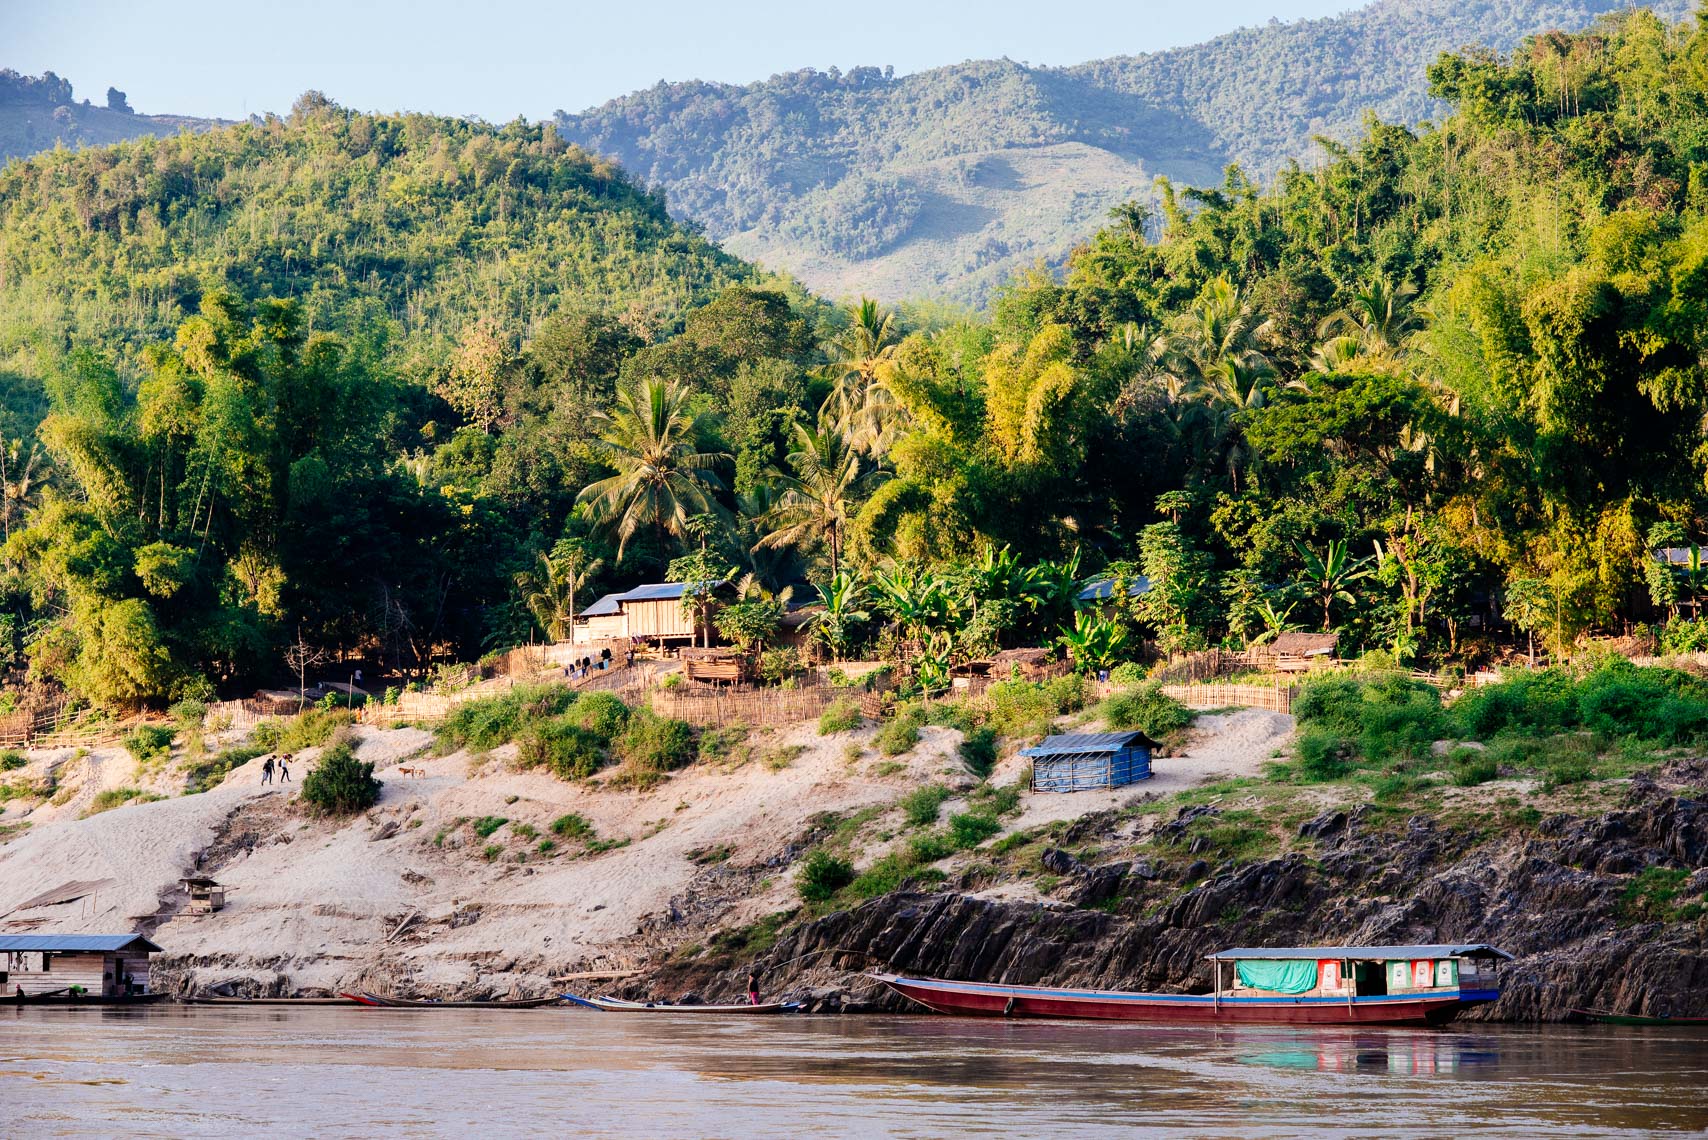 007_Mekong_River